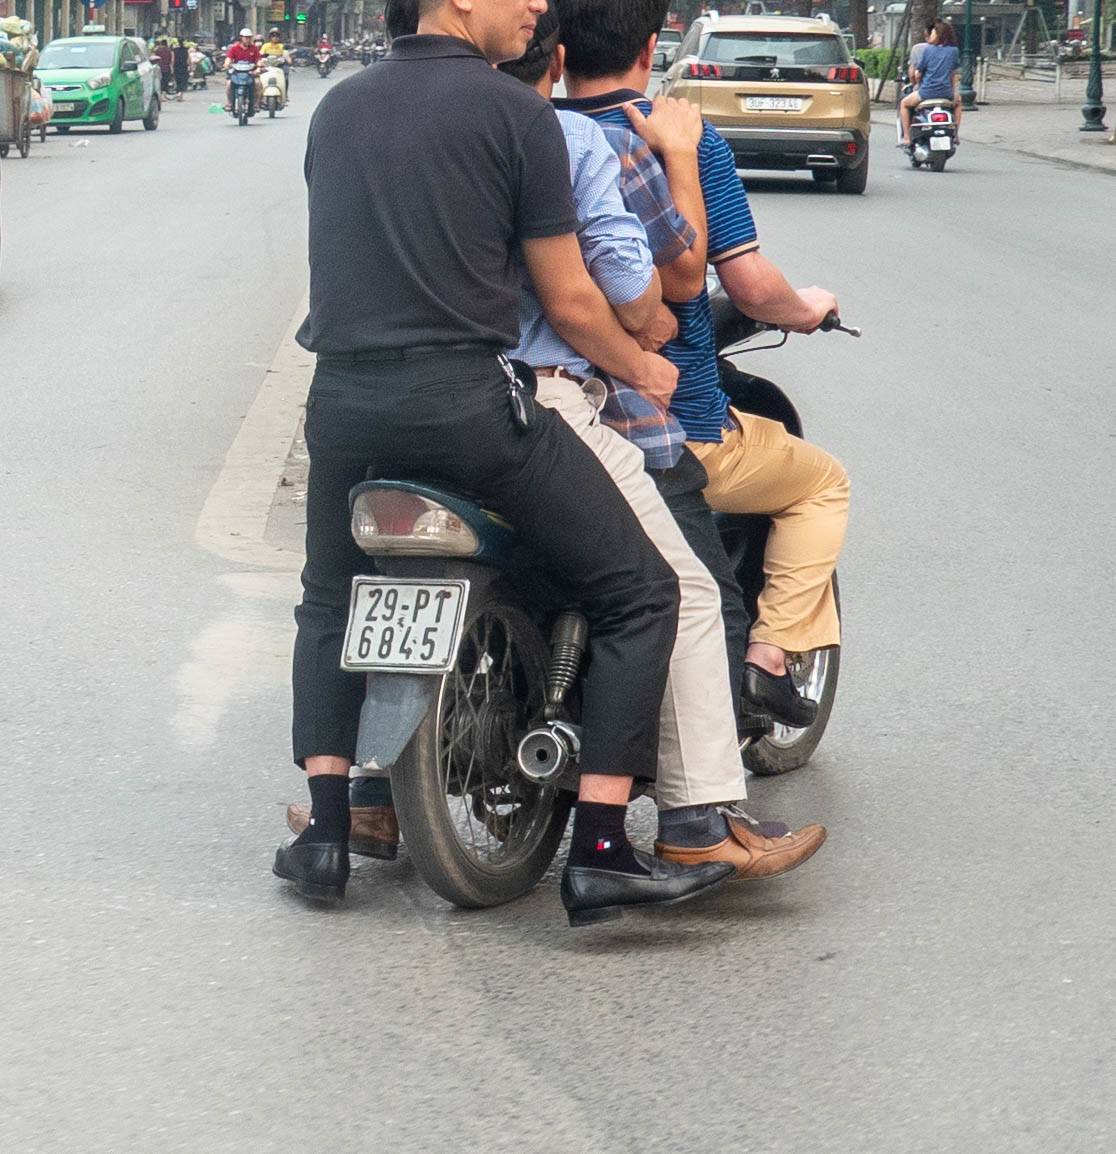 four grown men riding on one motorbike